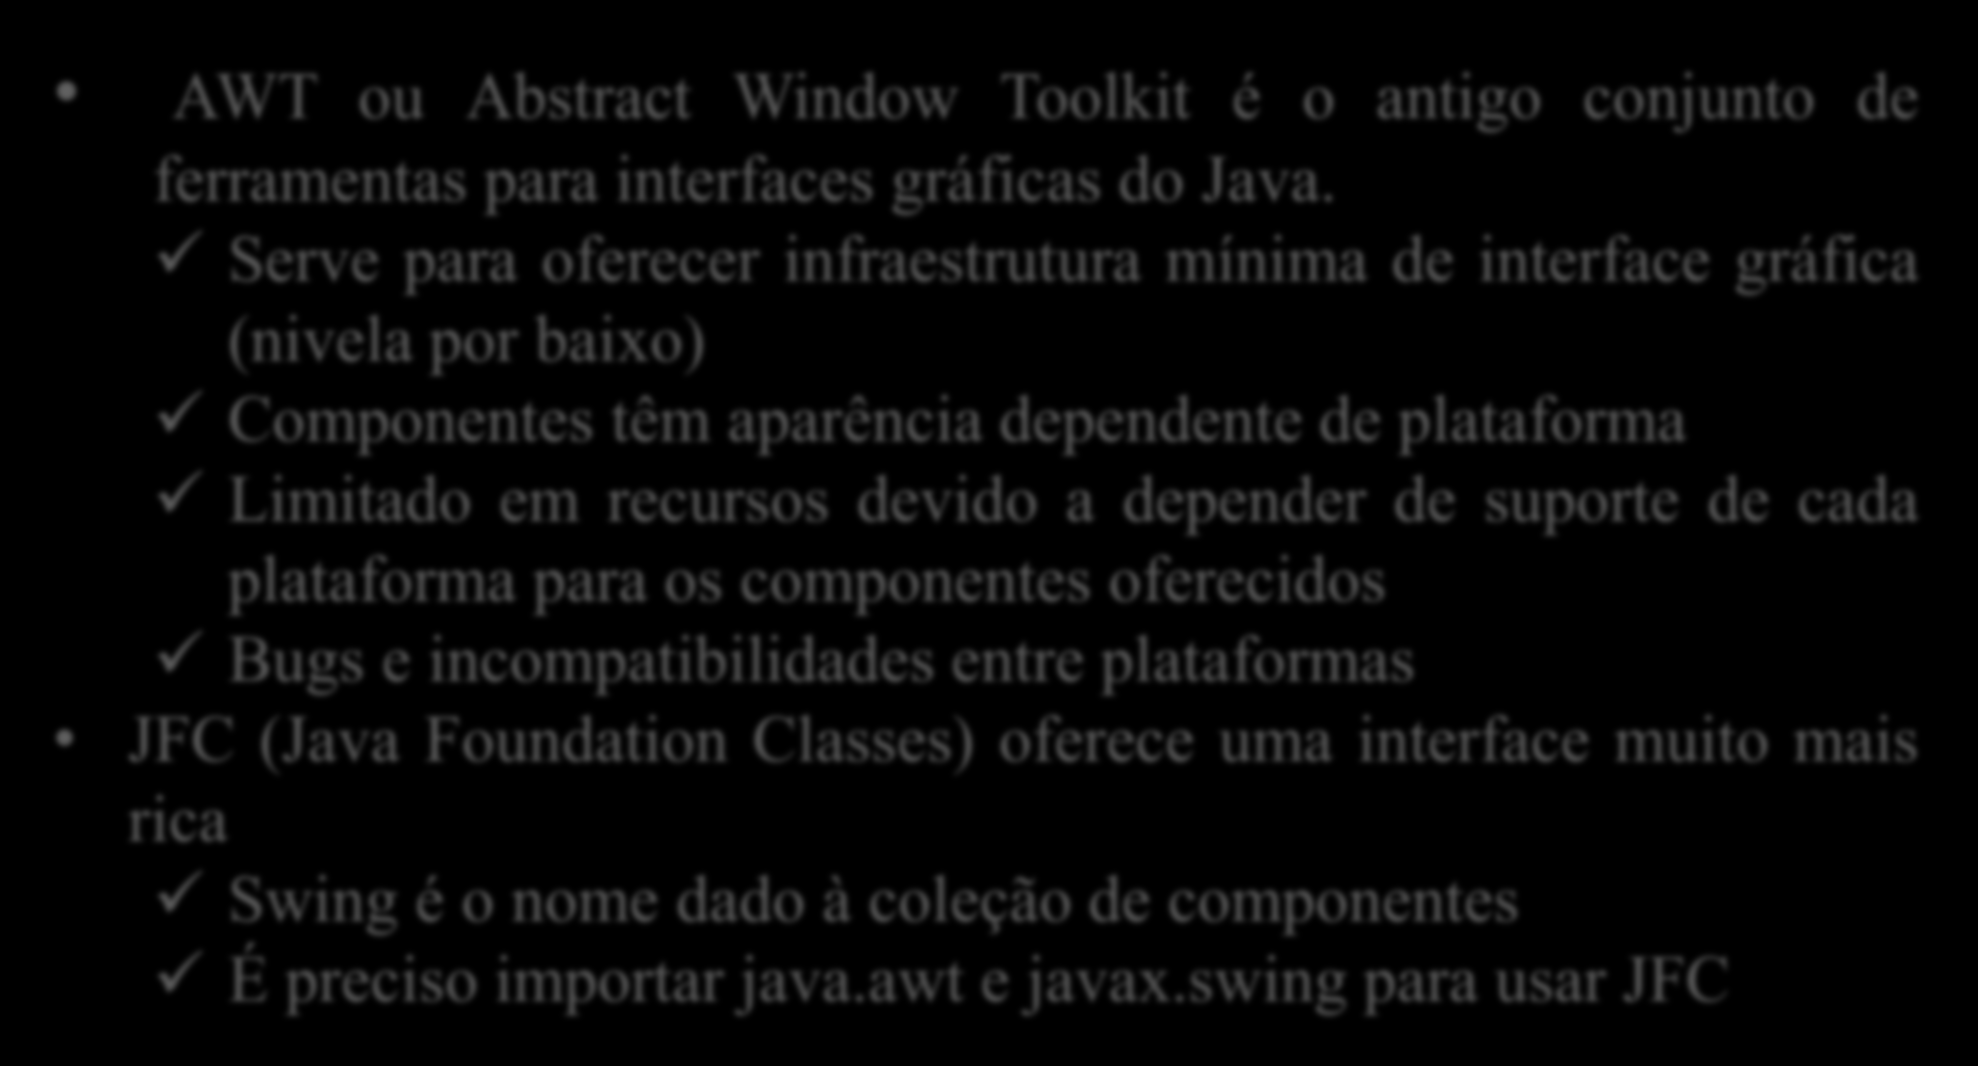 AWT e Swing AWT ou Abstract Window Toolkit é o antigo conjunto de ferramentas para interfaces gráficas do Java.